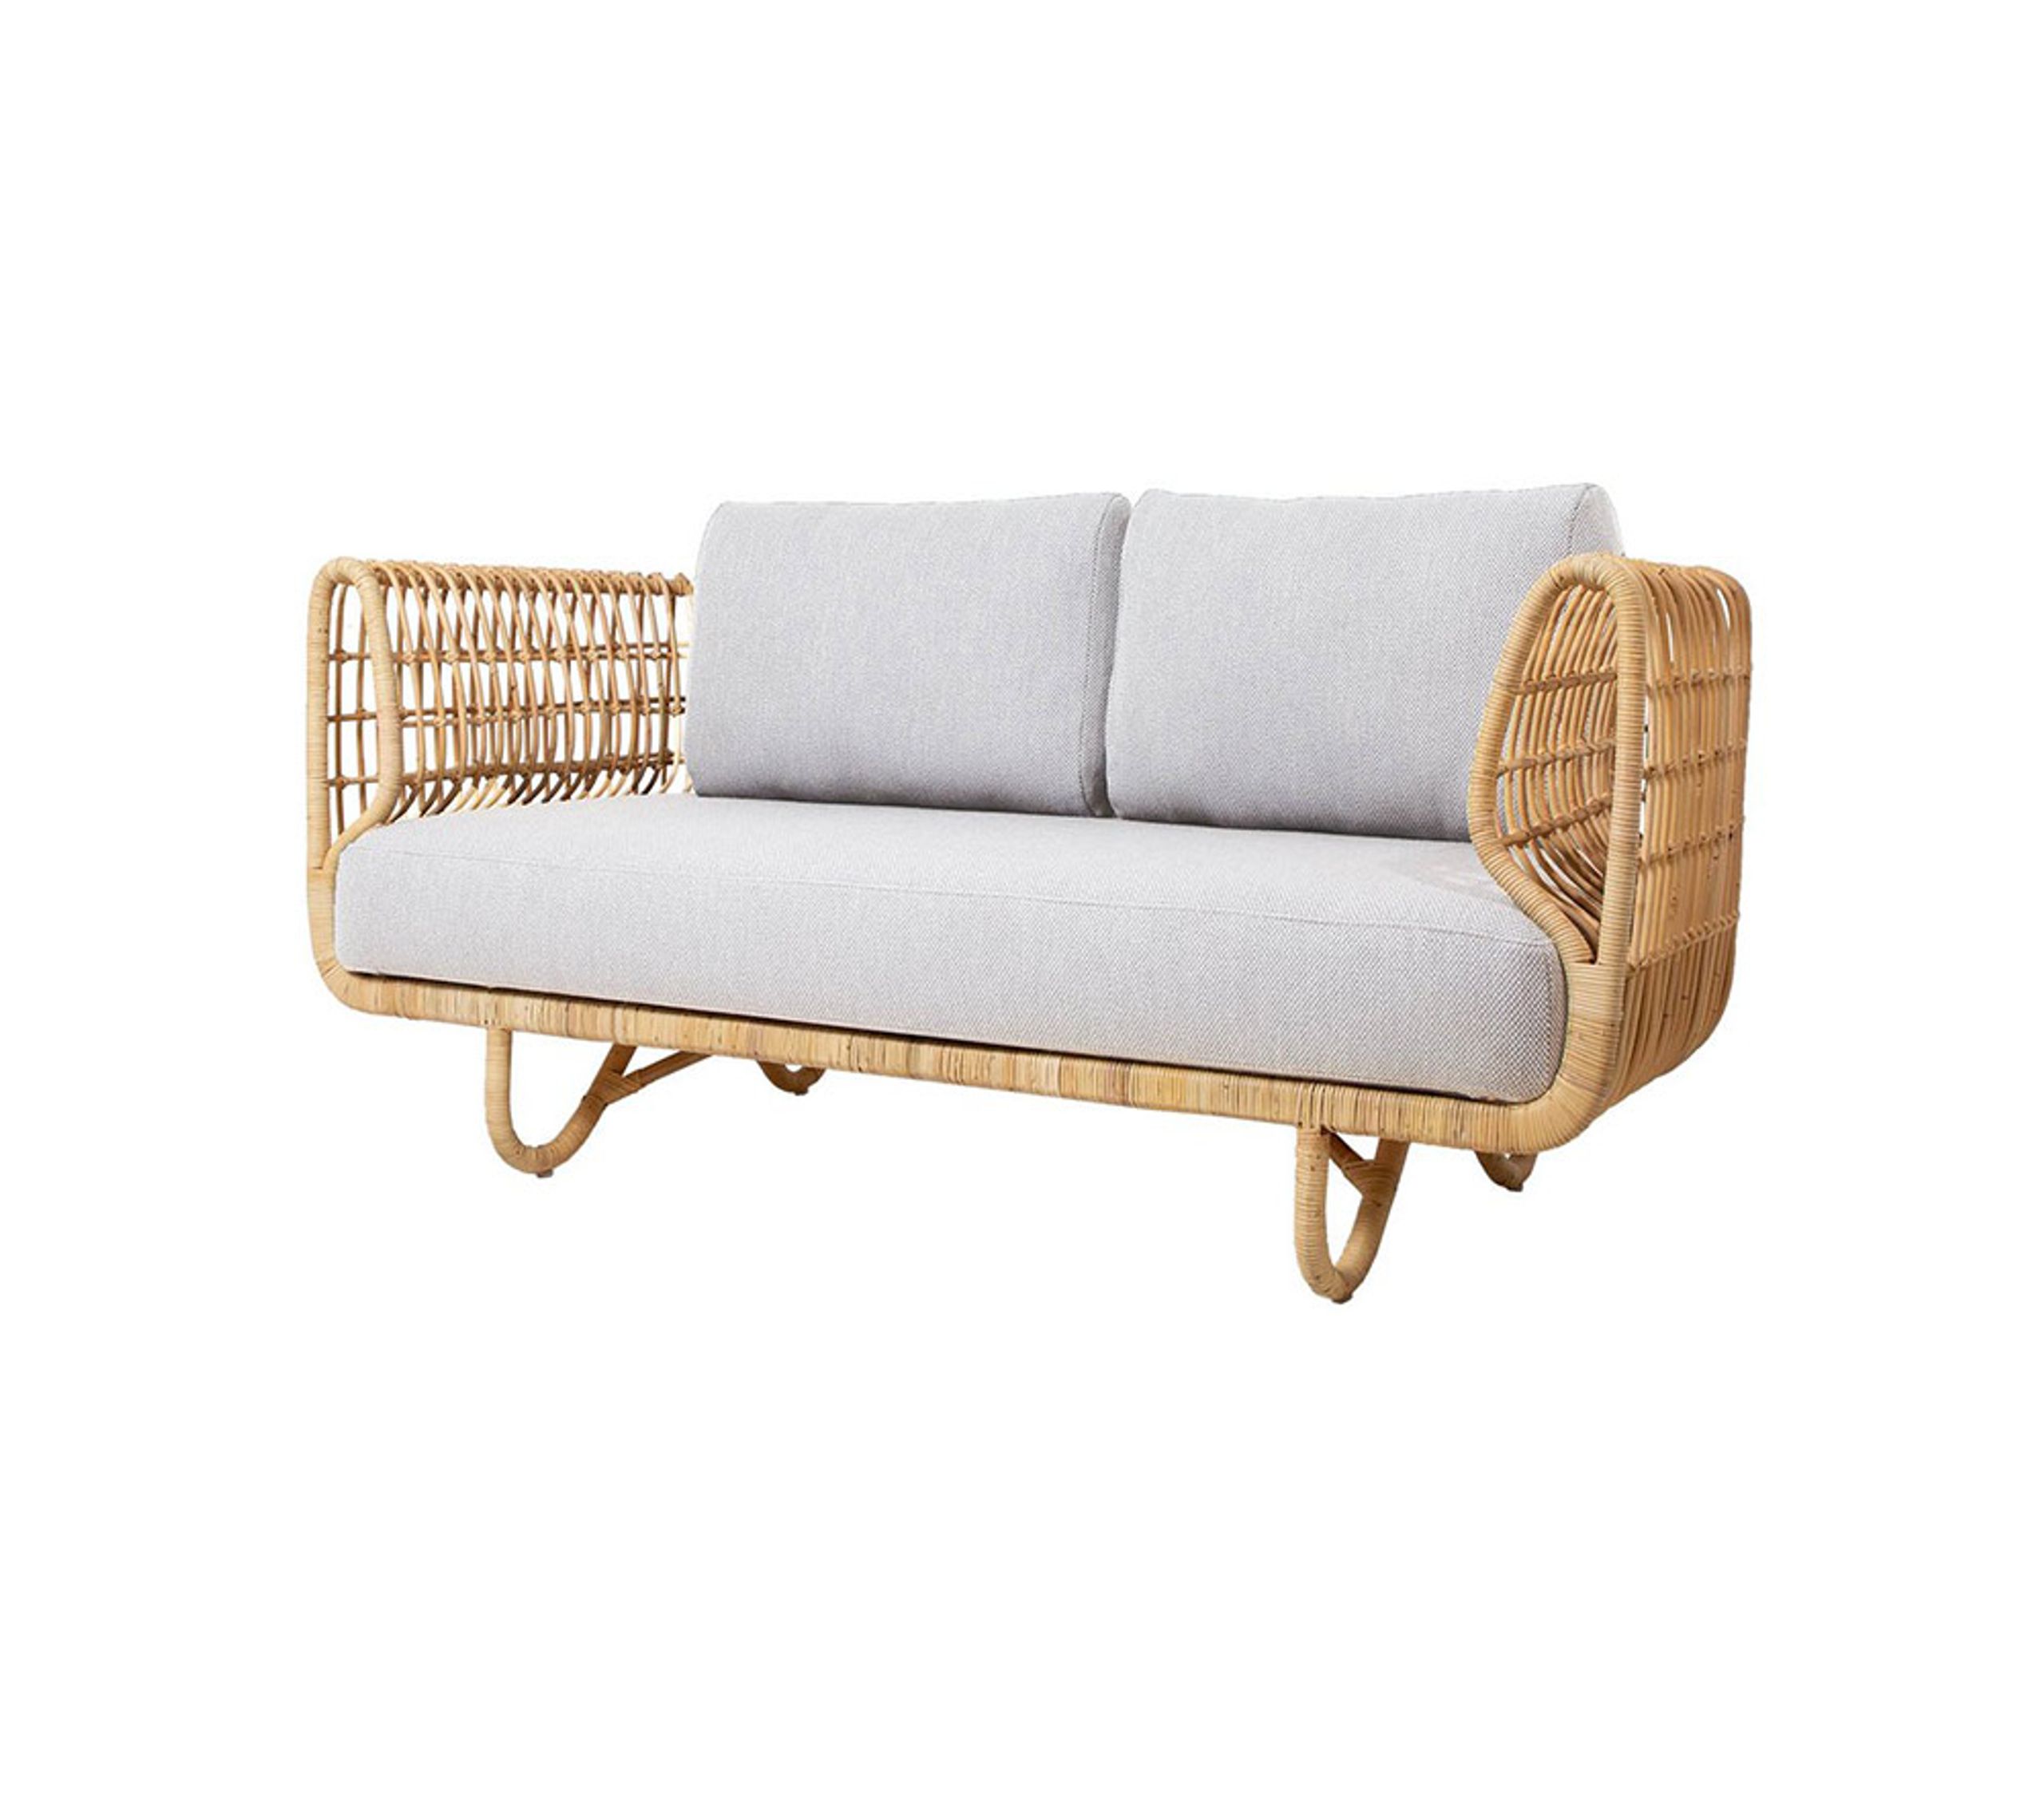 Cane-line - Coussin - Cushion set for Nest sofa - Indoor - B: 75 x D: 149 x H: 16 cm